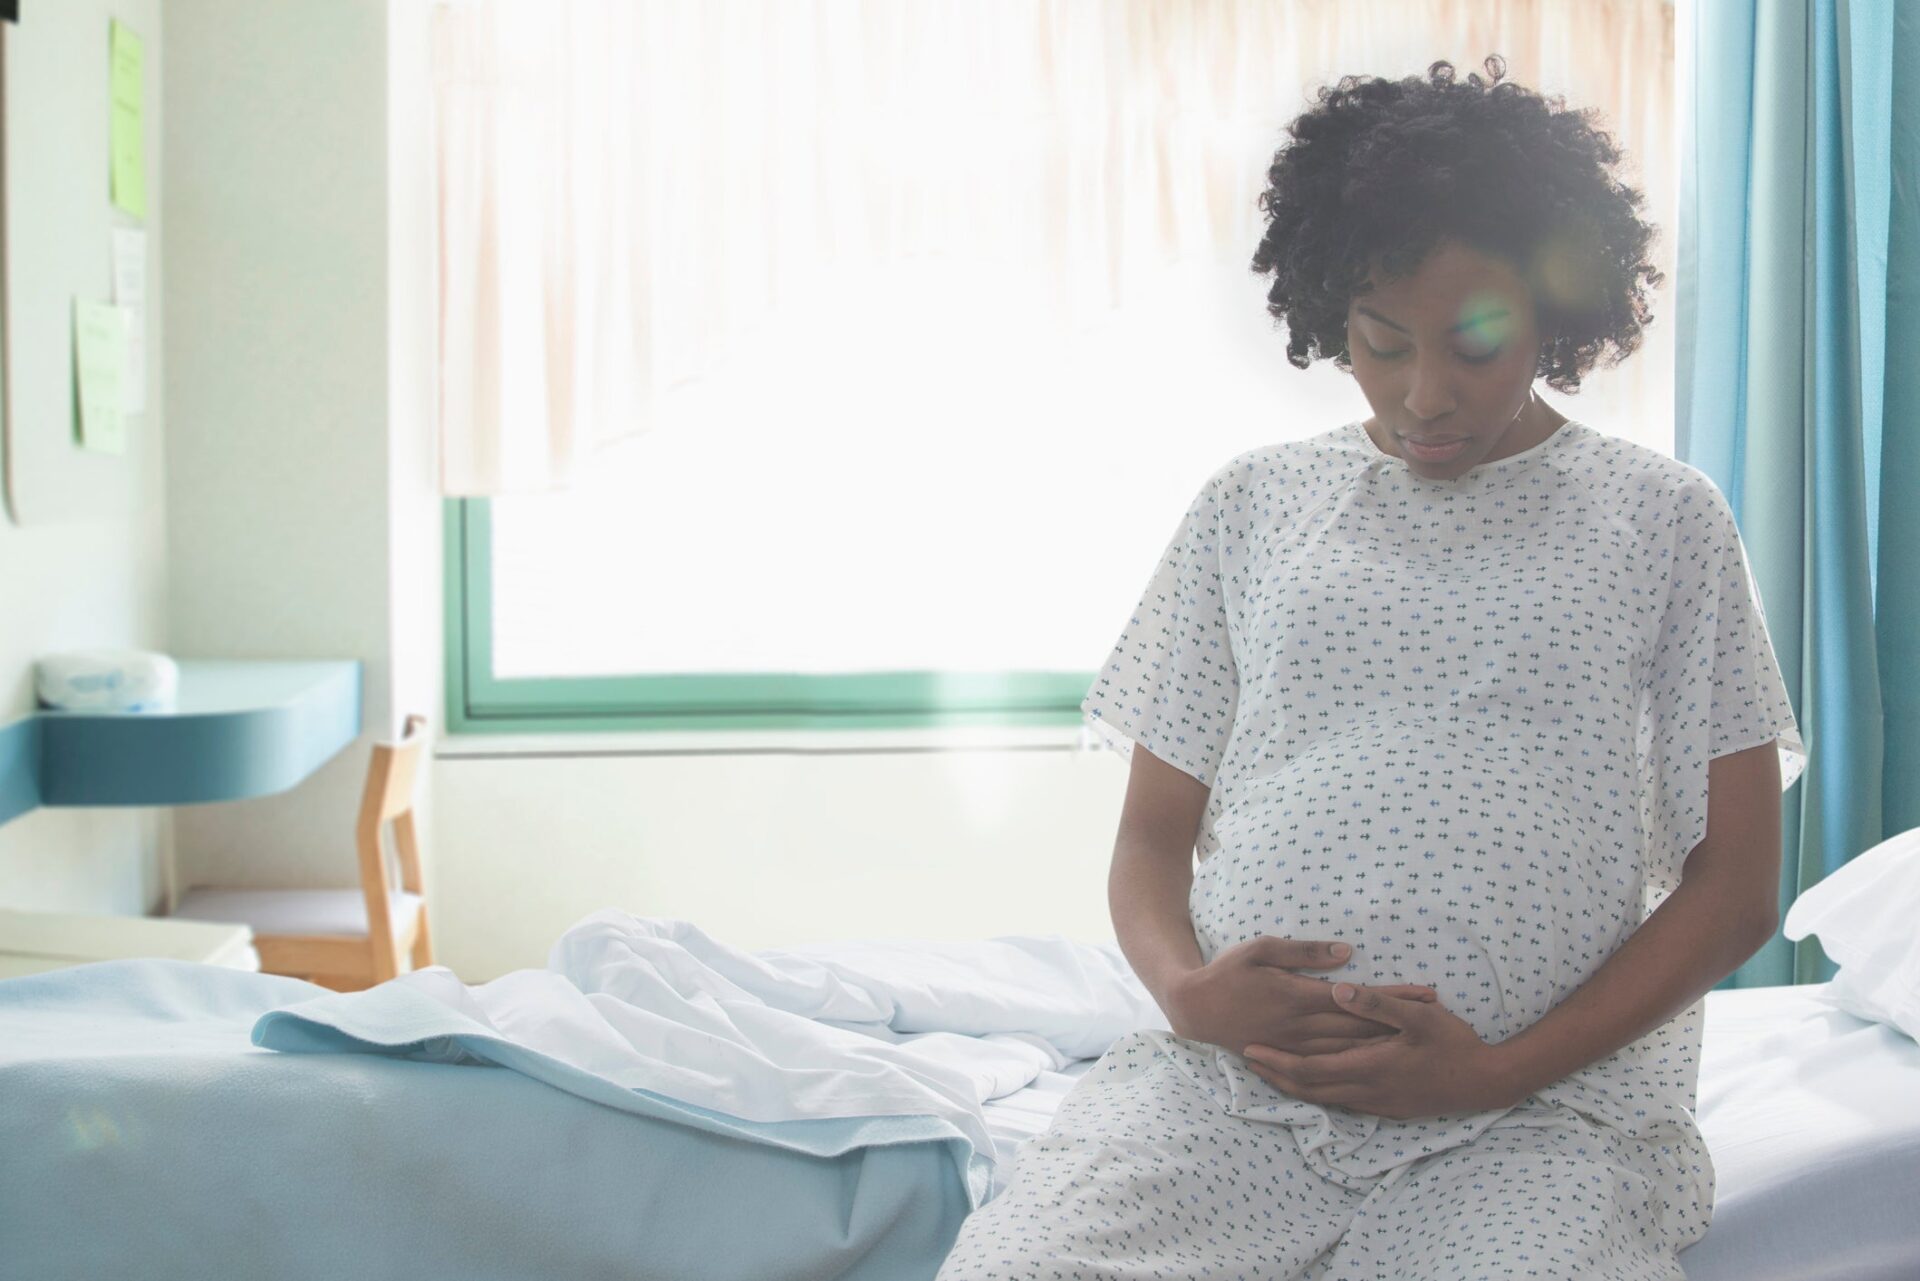 Cedars-Sinai Medical Center Facing Civil Rights Probe Over Their Treatment Of Black Women Giving Birth